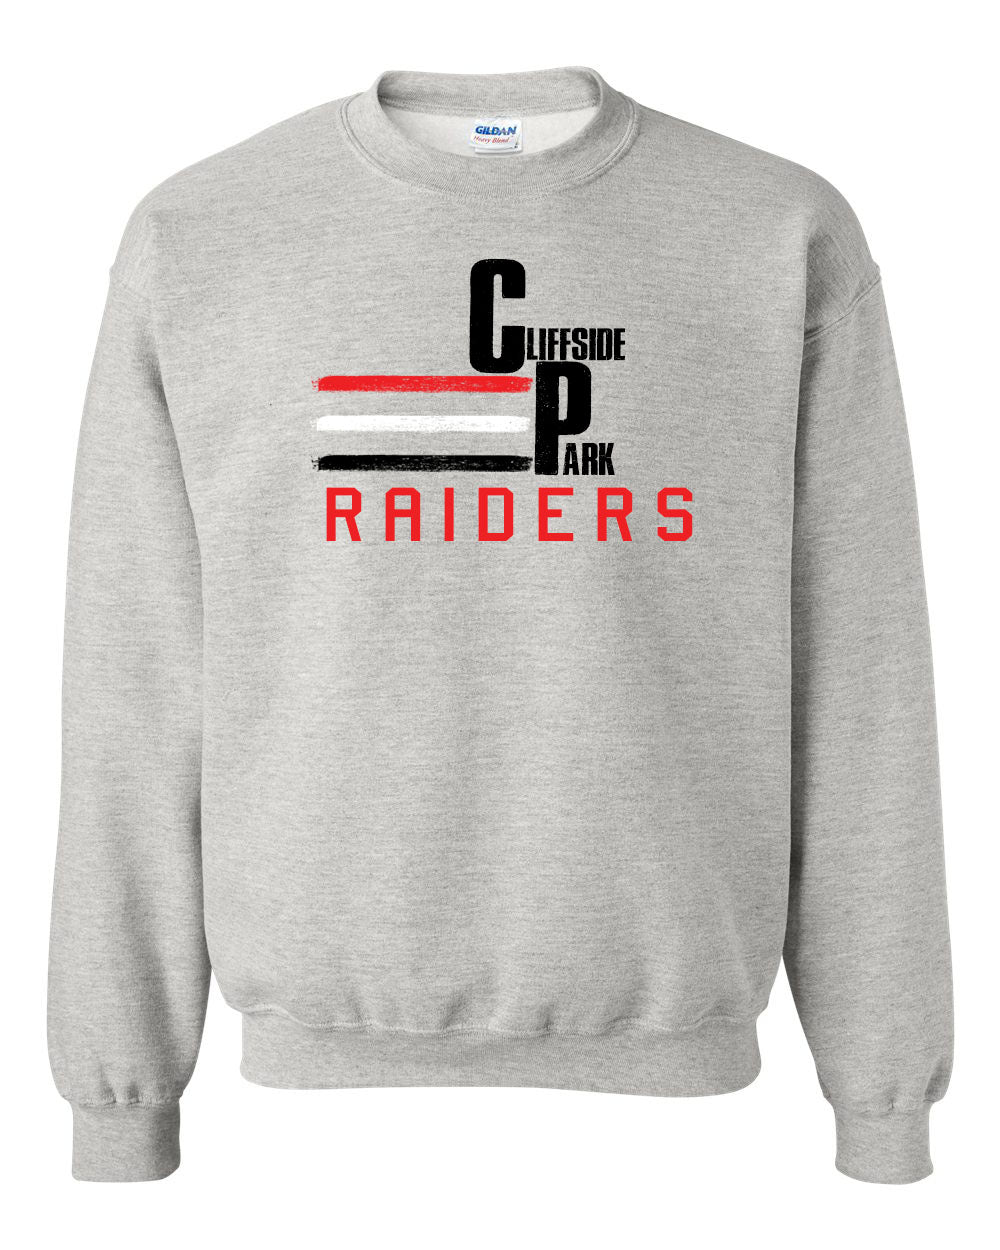 CP Raiders non hooded sweatshirt